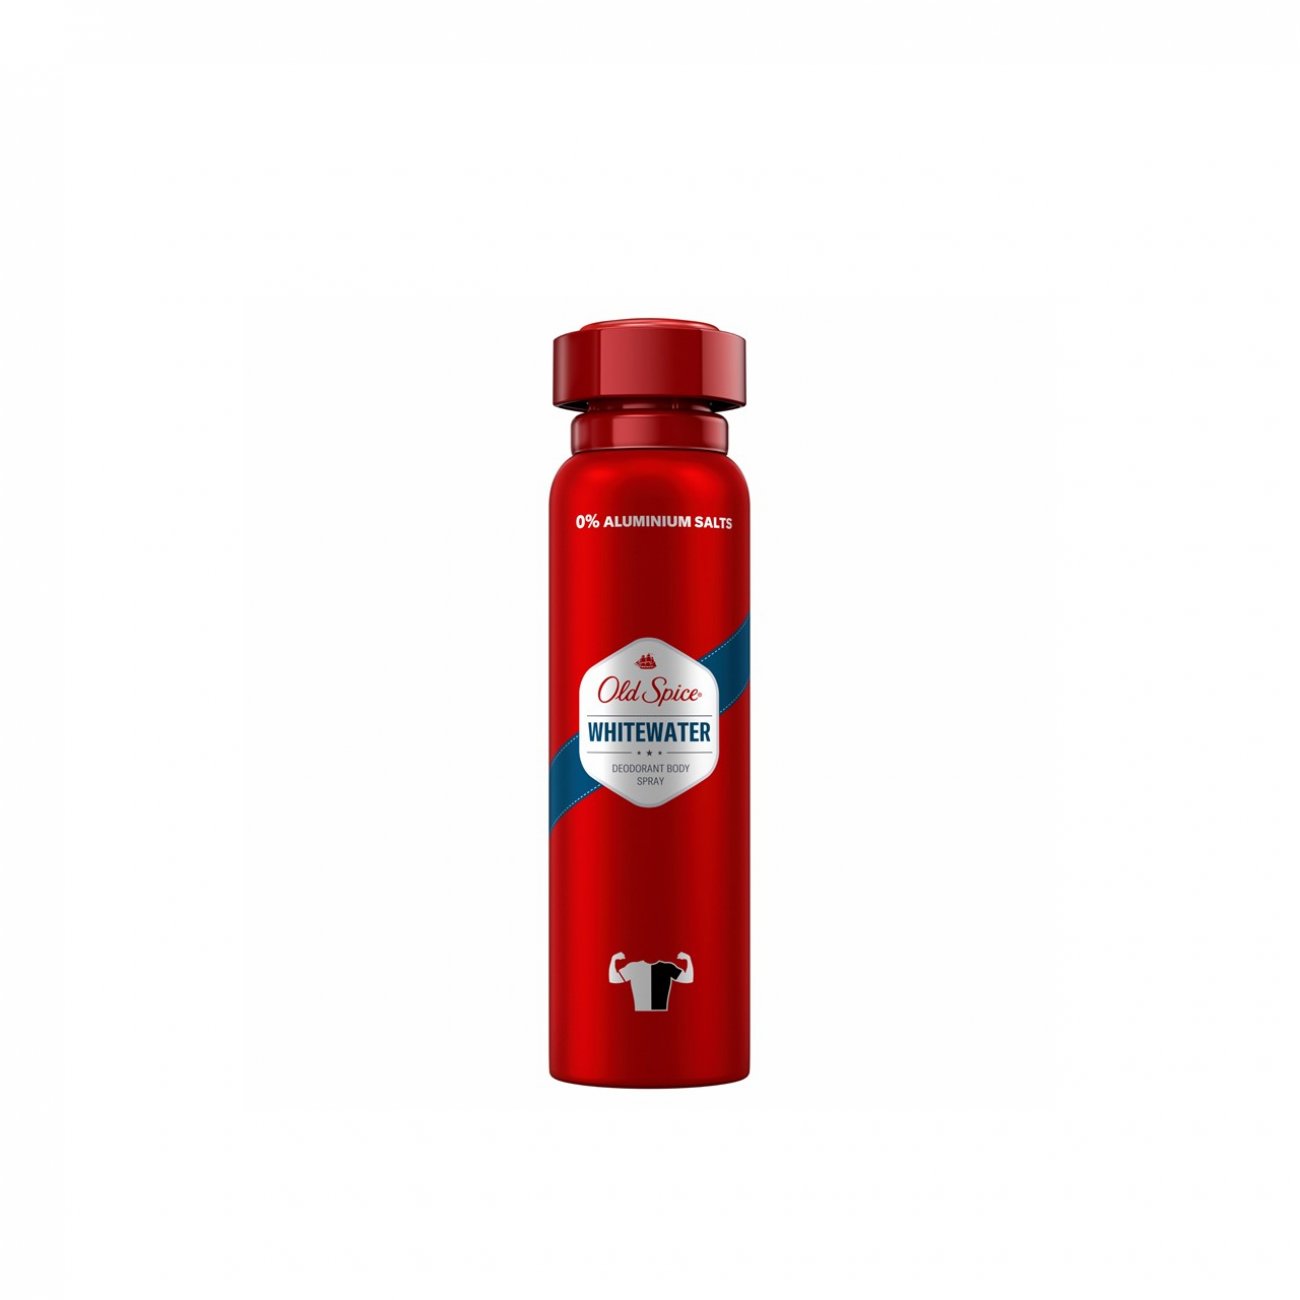 Classificeren krom koelkast Kopen Old Spice Whitewater Deodorant Body Spray 150ml · Nederland